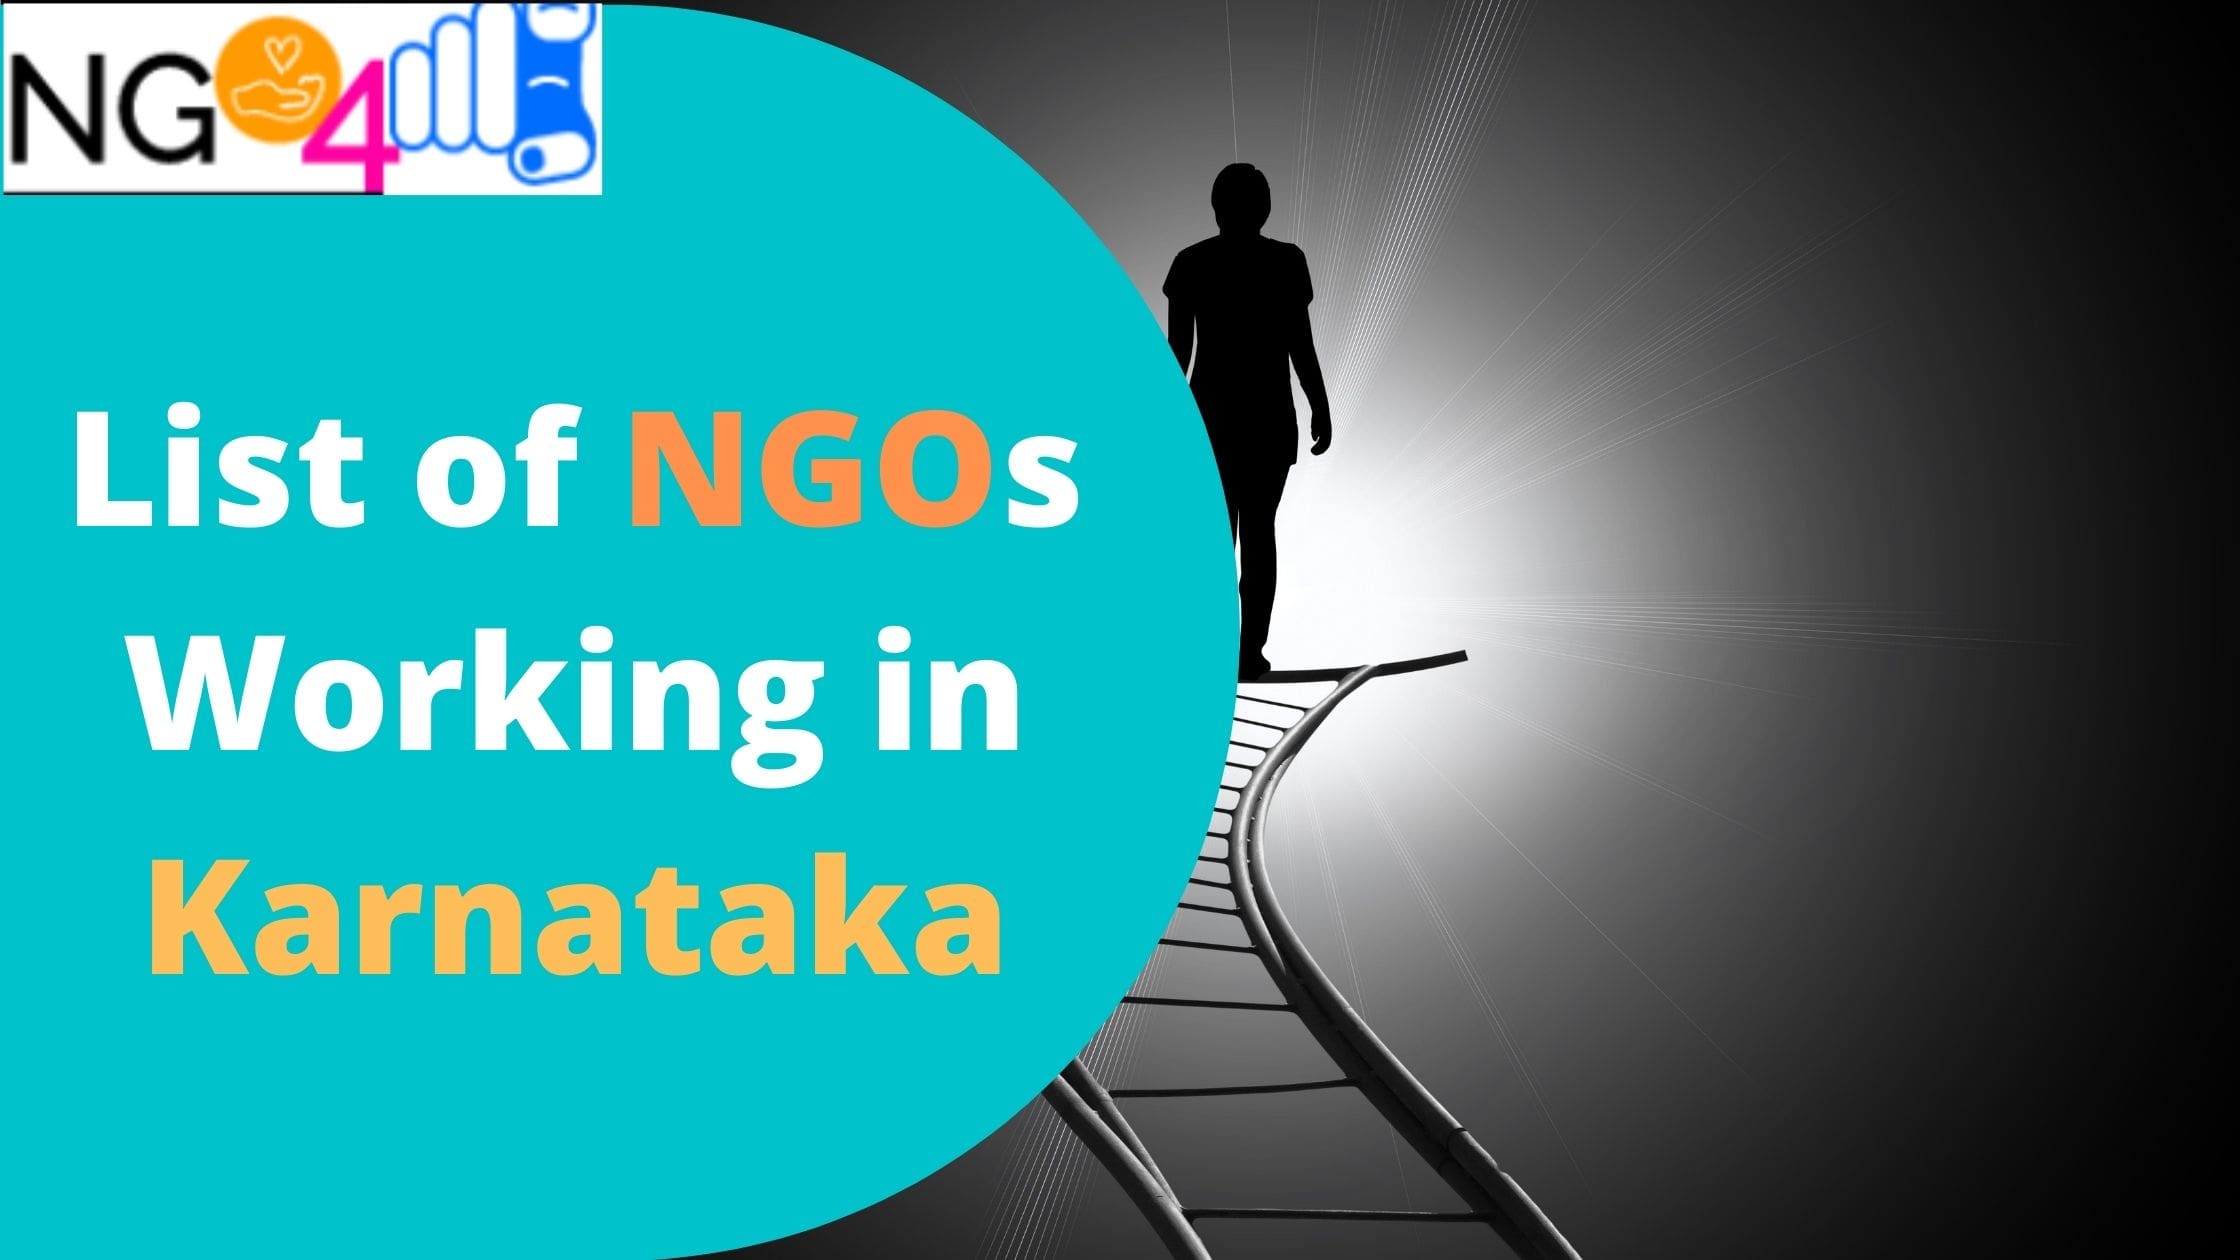 NGO In Karnataka - 5300+ Registered NGO's List - NGO4YOU